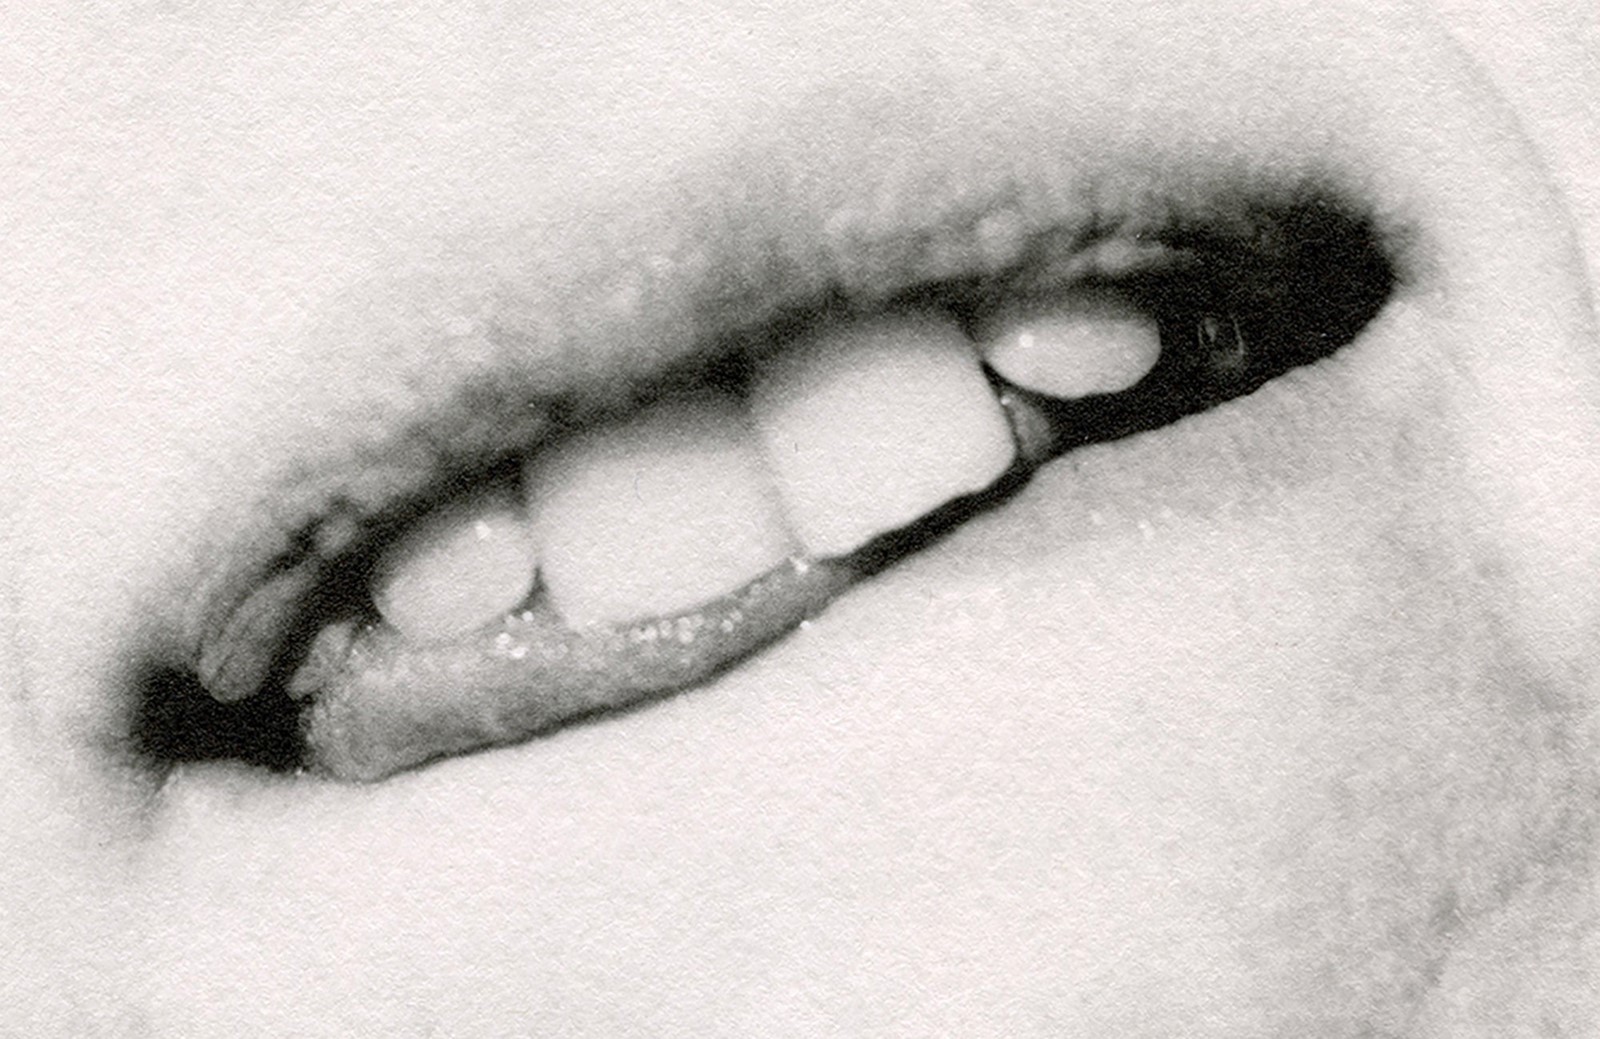 Deanna Pizzitelli, Mouth, I, 2018